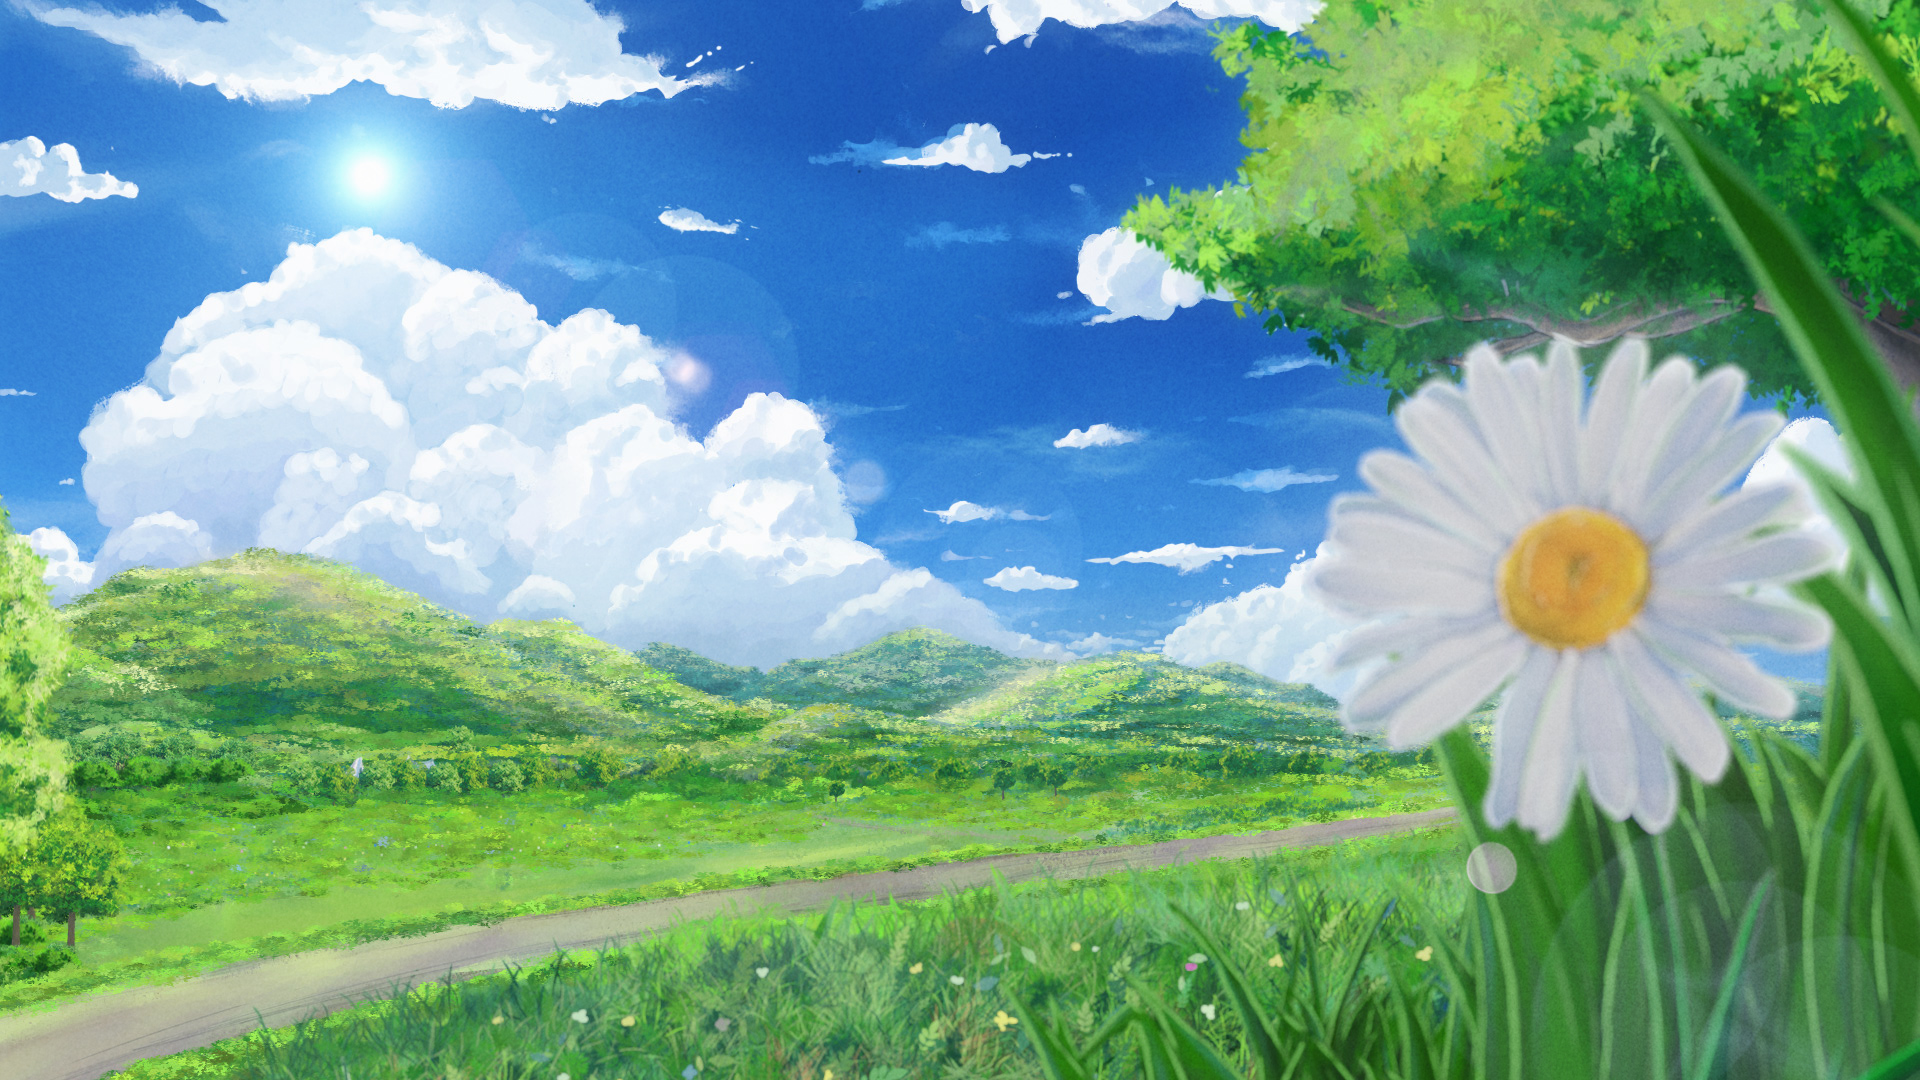 Anime 1920x1080 digital art illustration artwork animation field outdoors nature landscape grass clouds sky flowers plants